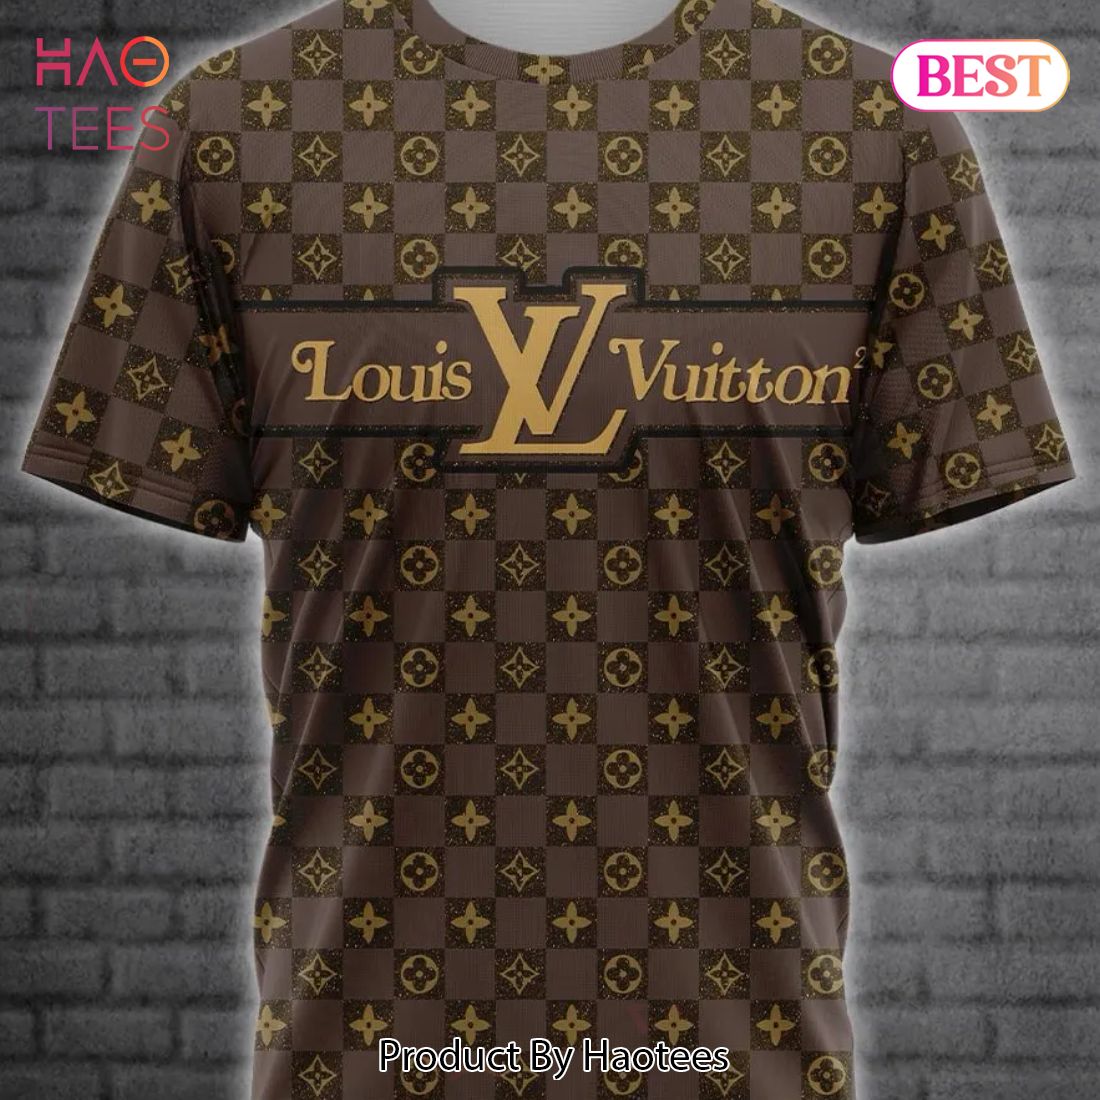 [NEW FASHION] Louis Vuitton Monogram Luxury Brand T-Shirt Outfit For Men Women